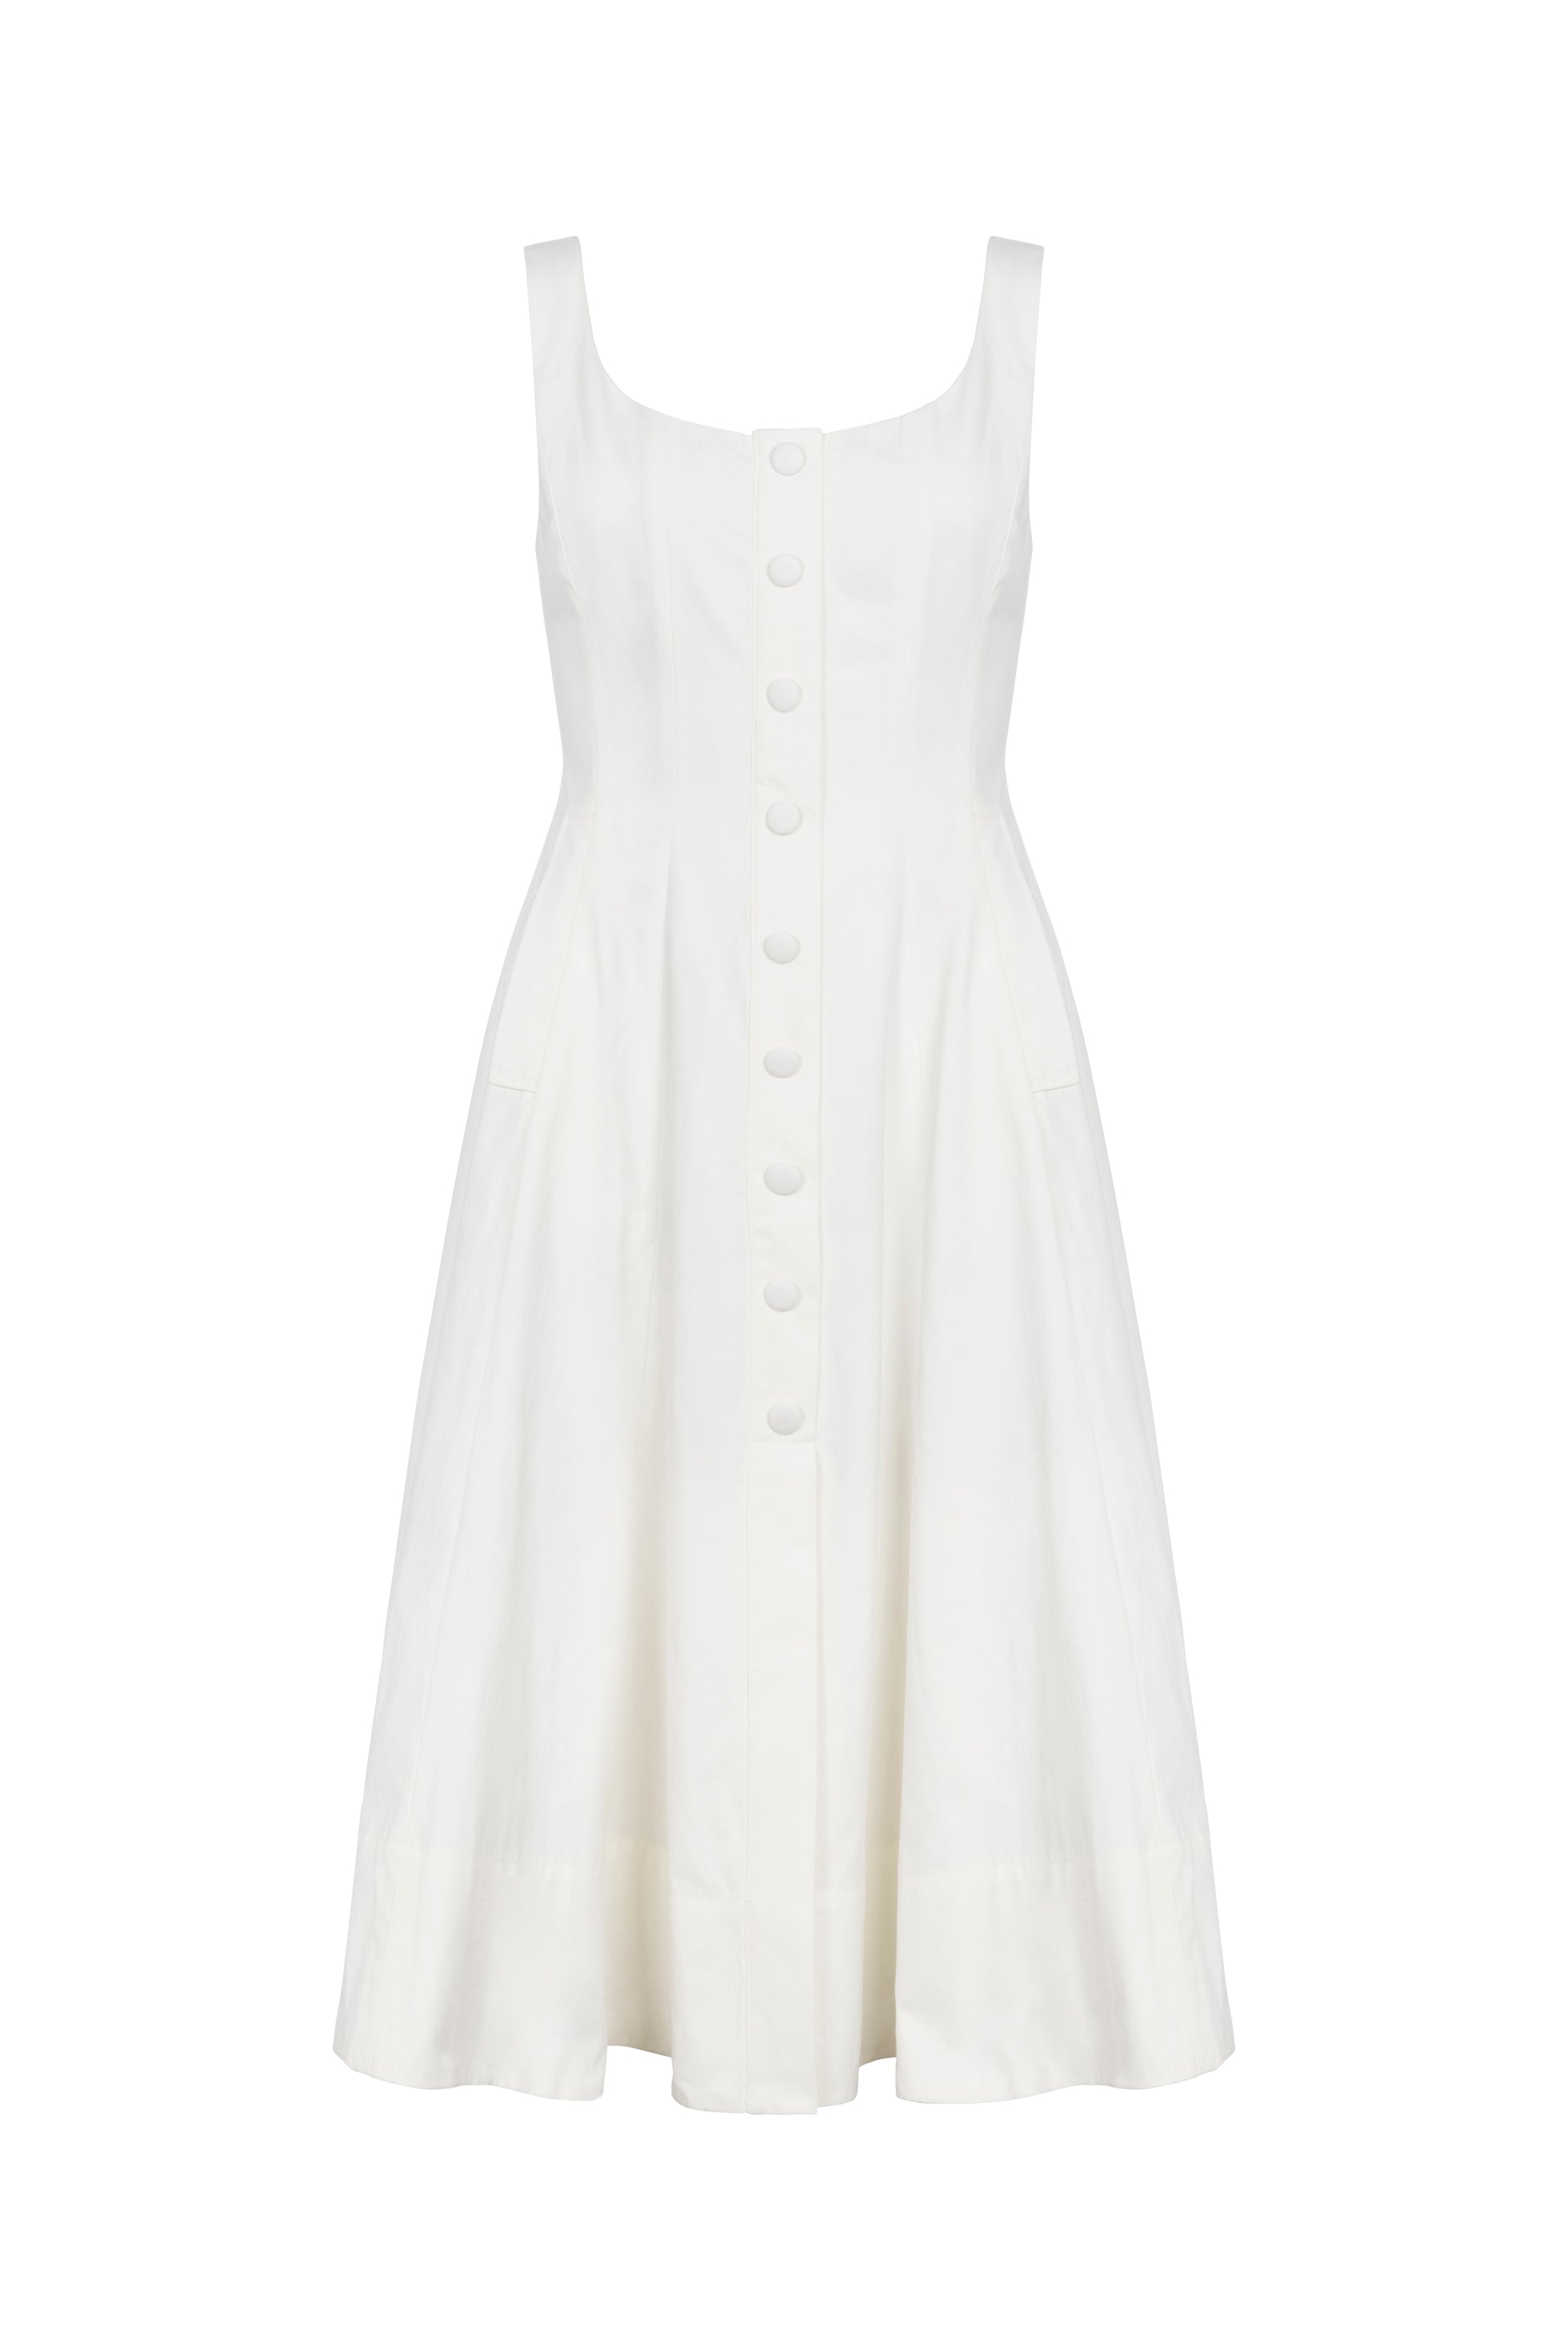 Boat Neck Dress (White)